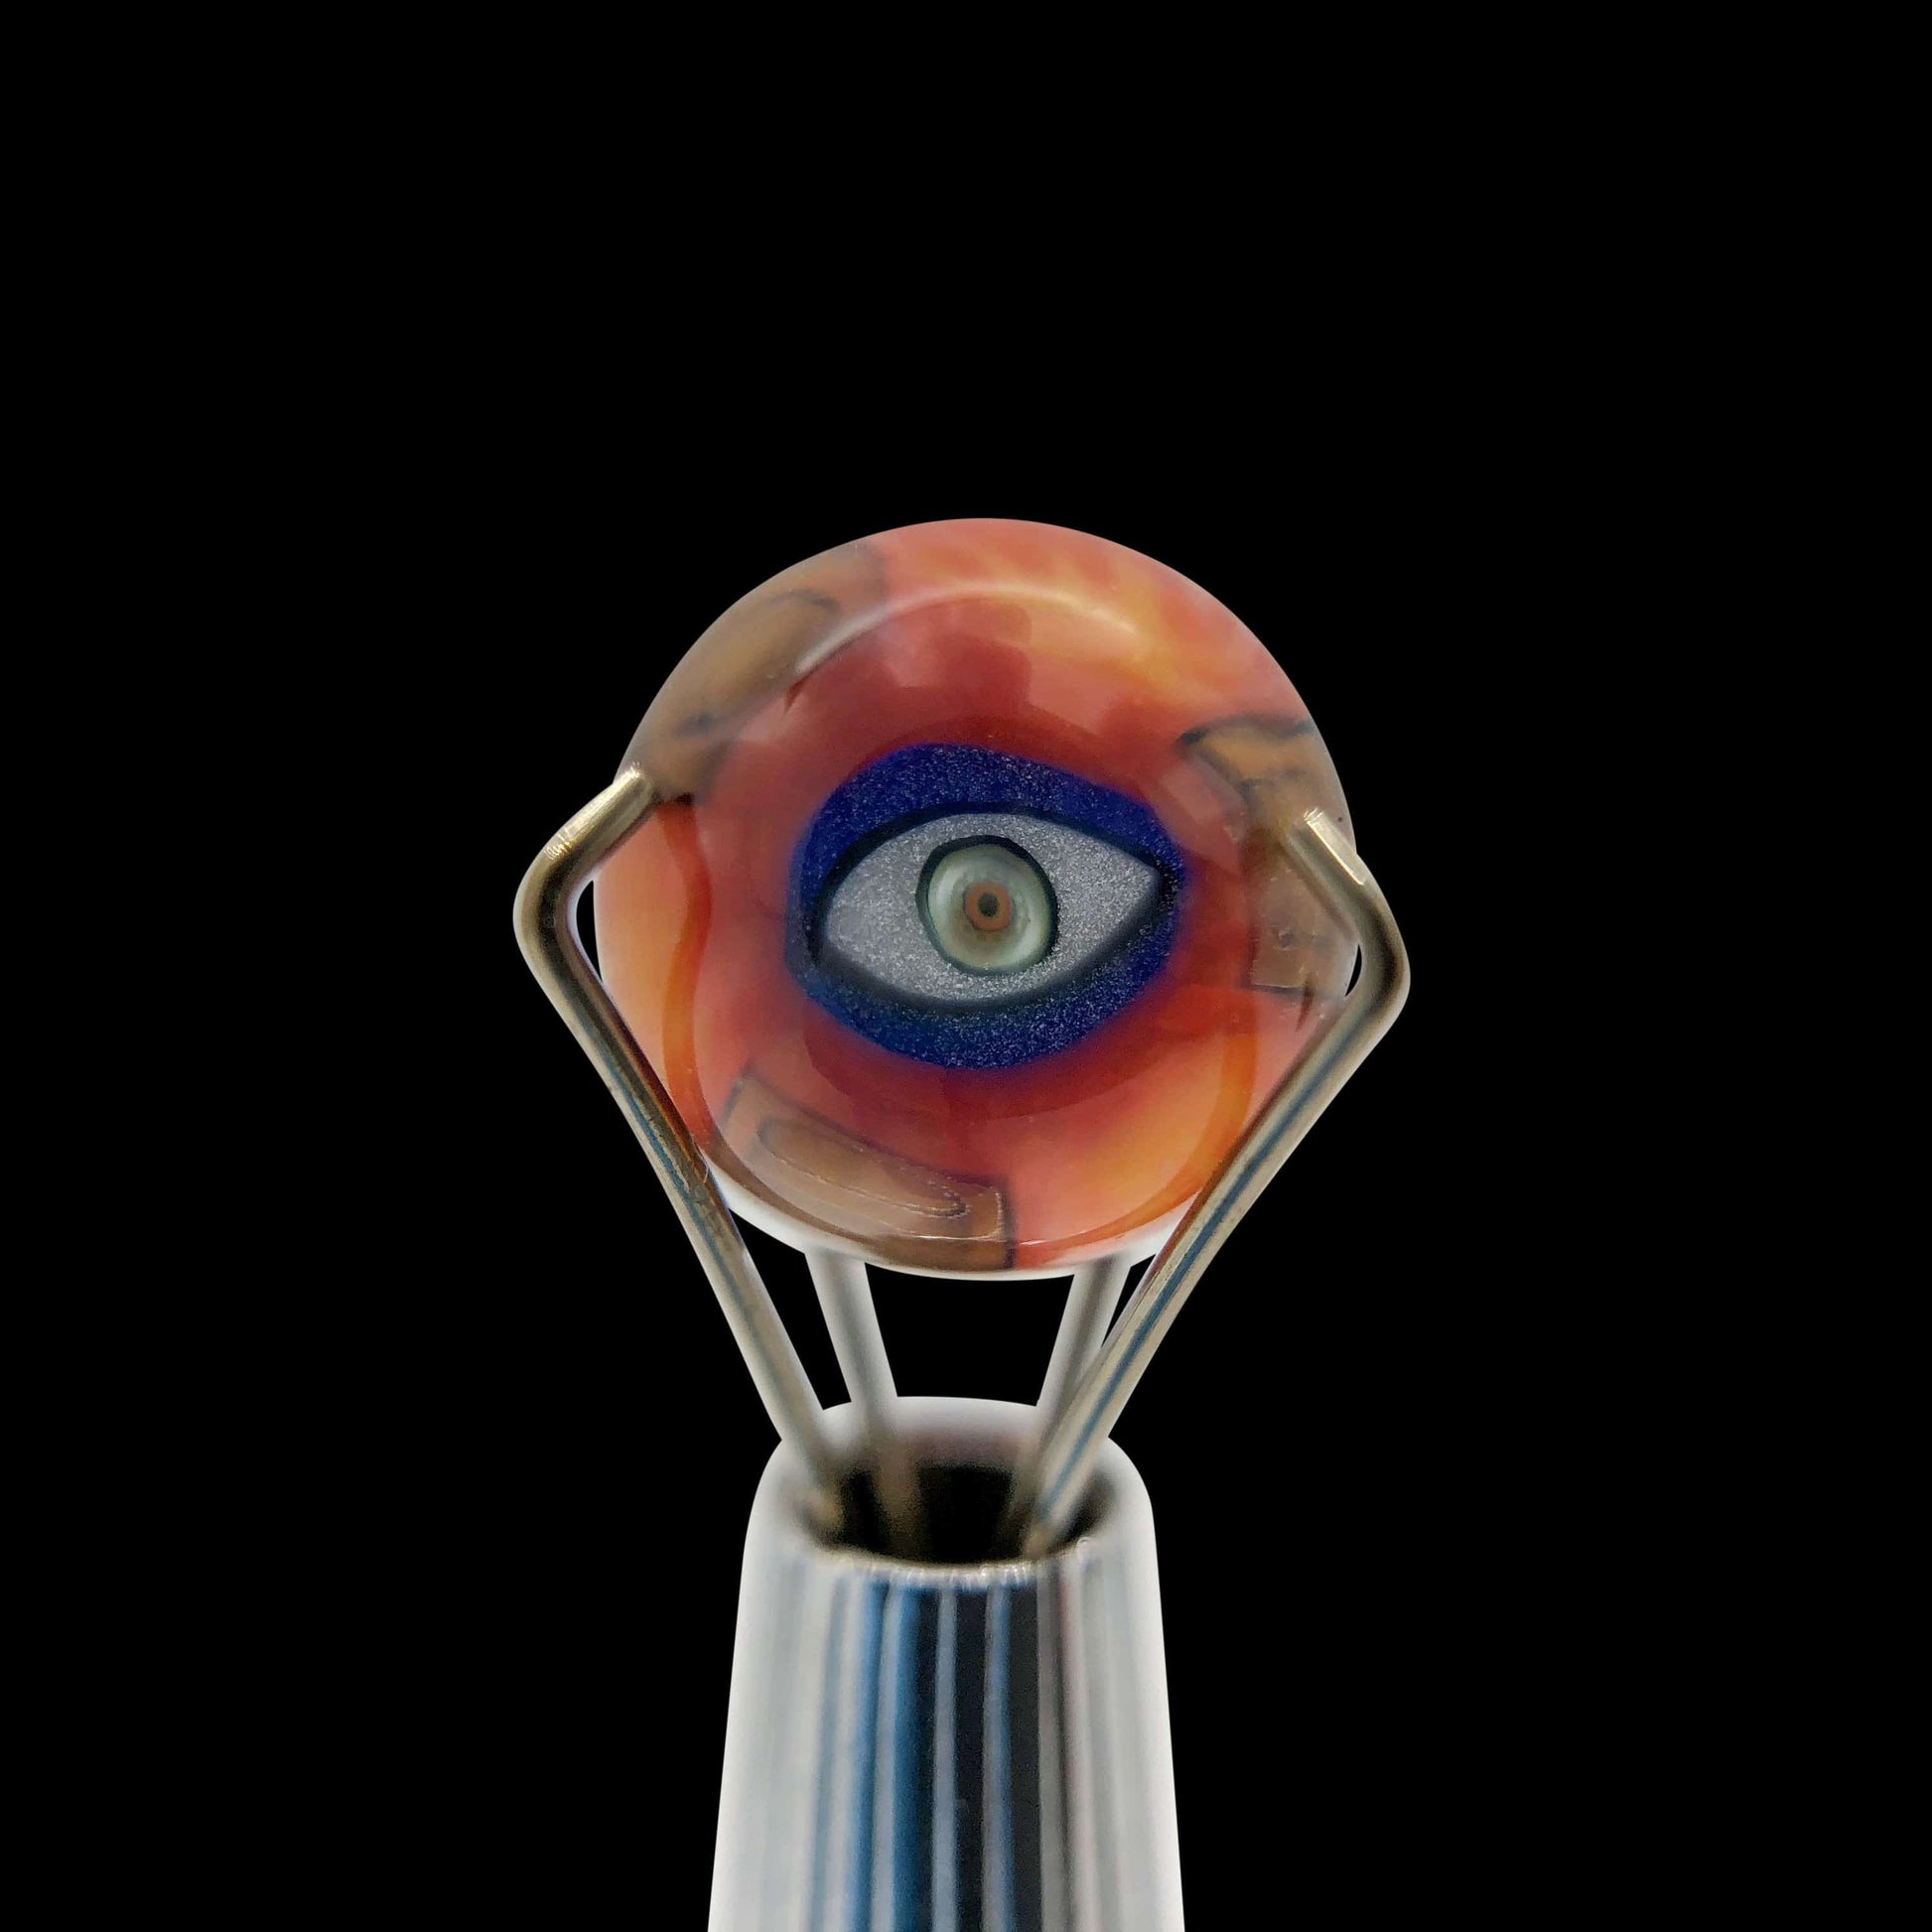 Banjo Glass Art - Orange/Brown Eyes Pearl Size 7.5mm-7.8mm - OPS.com